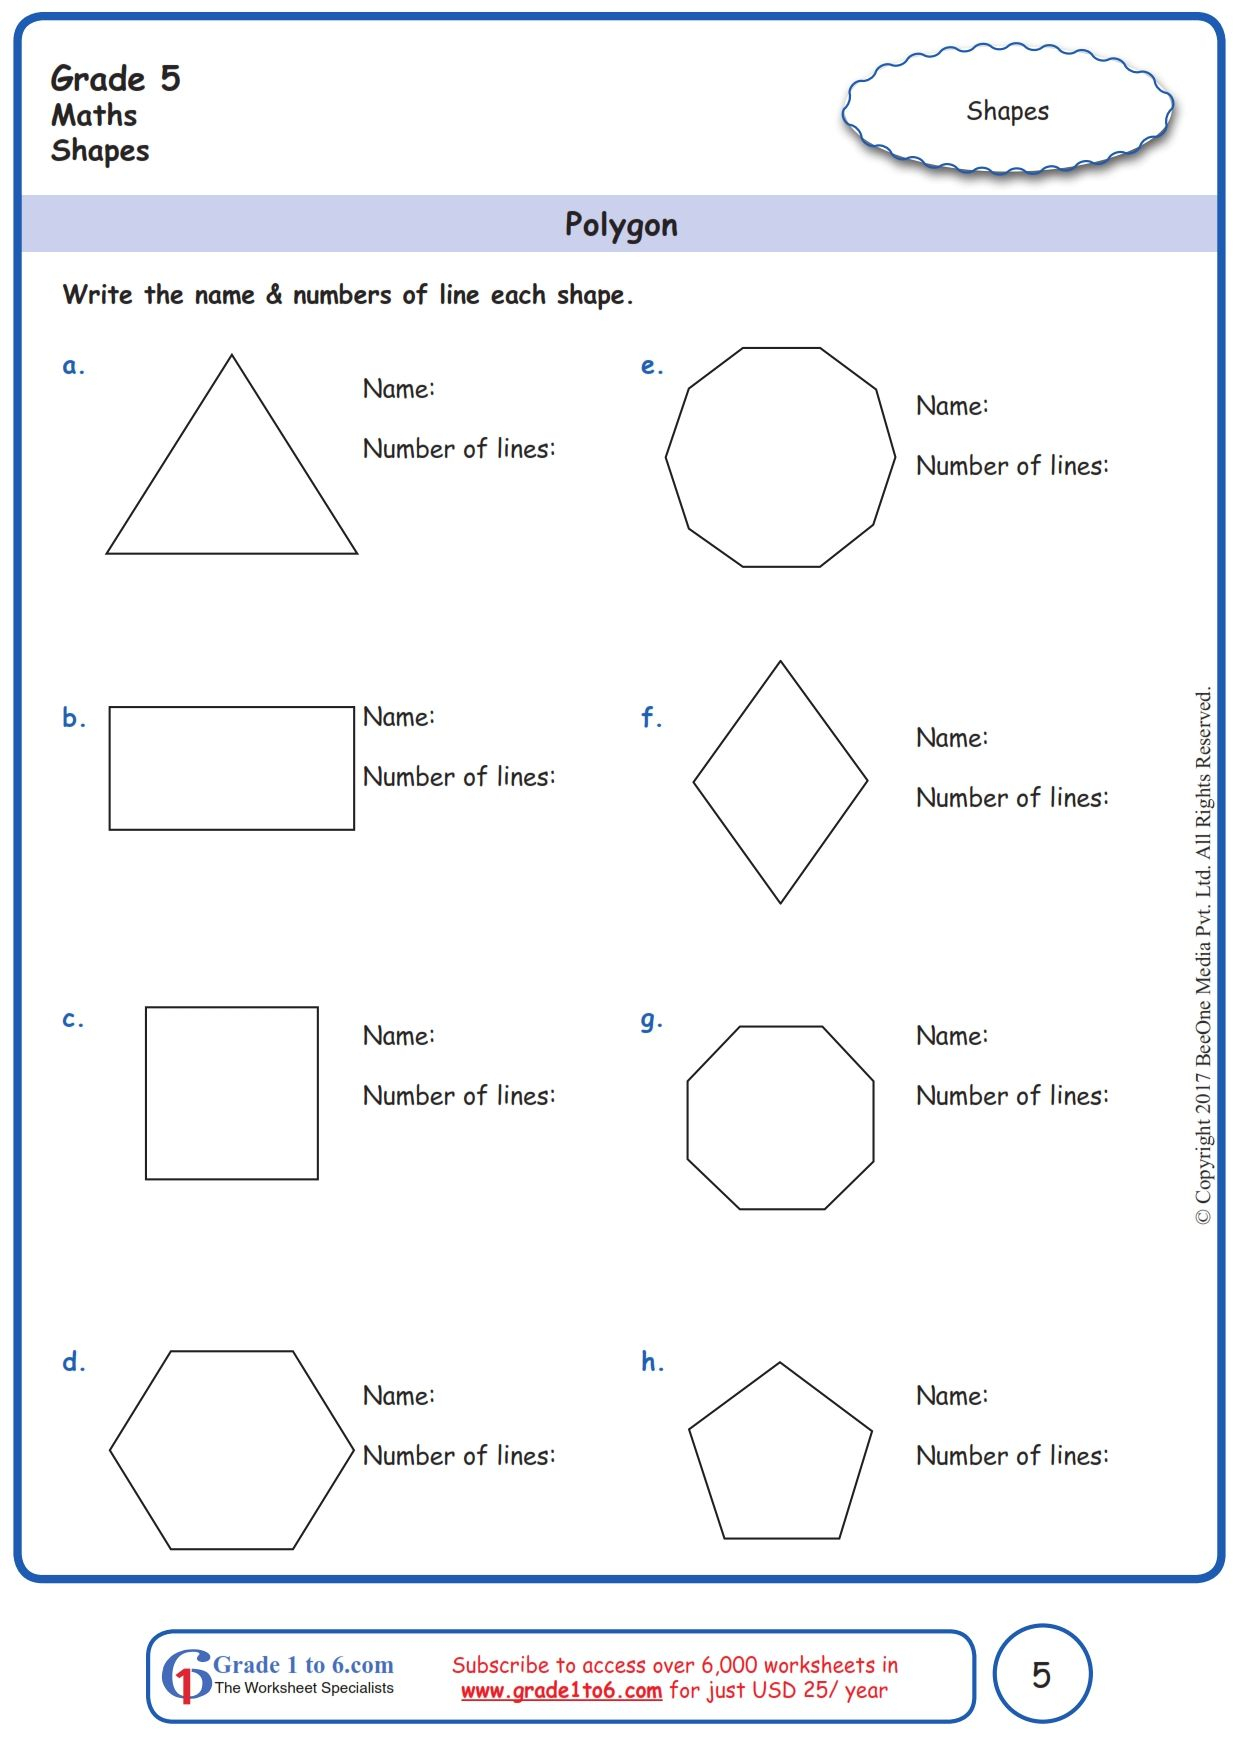 Worksheet Grade 5 Math Polygon | Preschool Math Worksheets, Grade - Free Printable Math Worksheets For Grade 5 Geometry